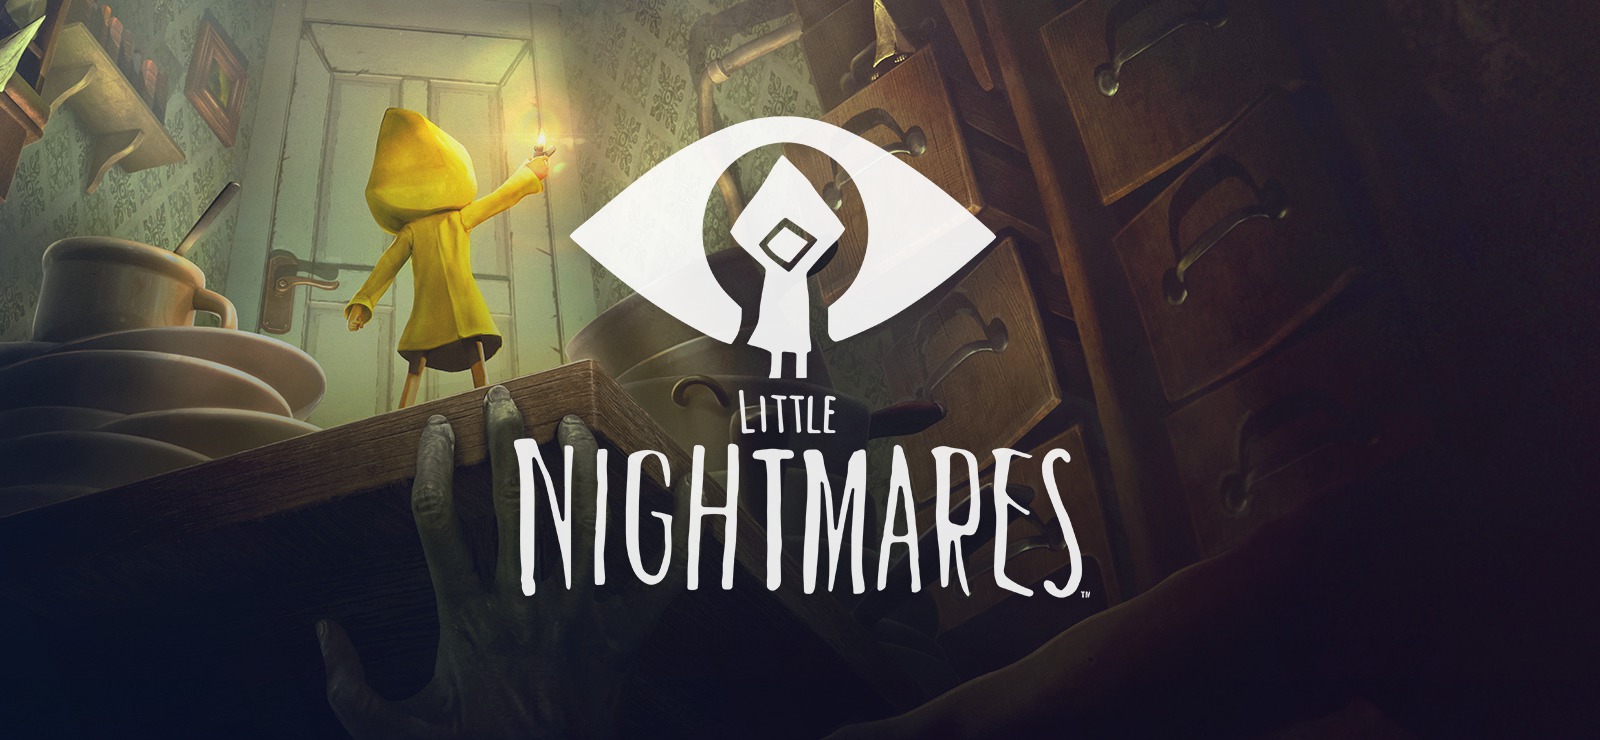 Little Nightmares Review - GameSpot